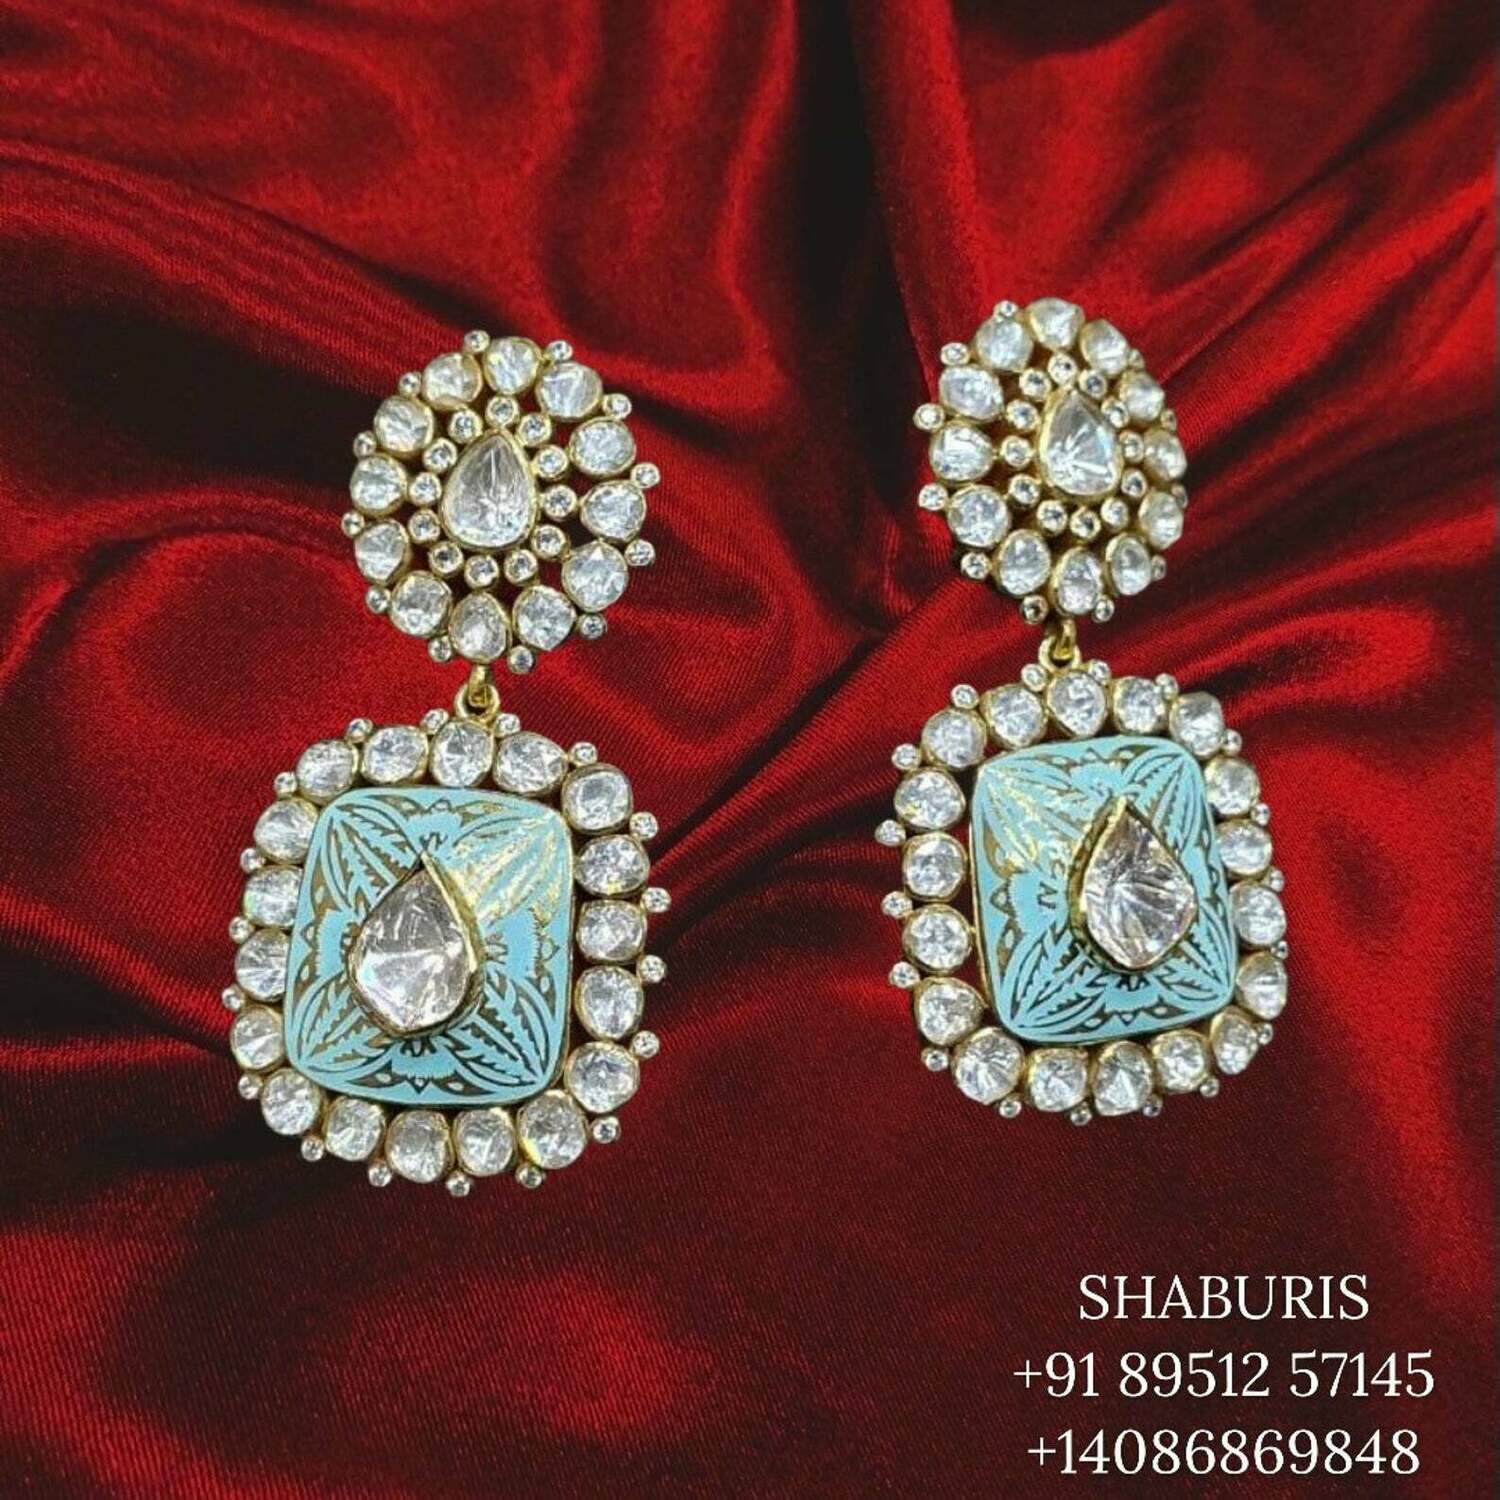 Menakari earrings polki diamond uncut diamond earrings gold jewelry designs latest pure silver jewelry destination jewelry - SHABURIS